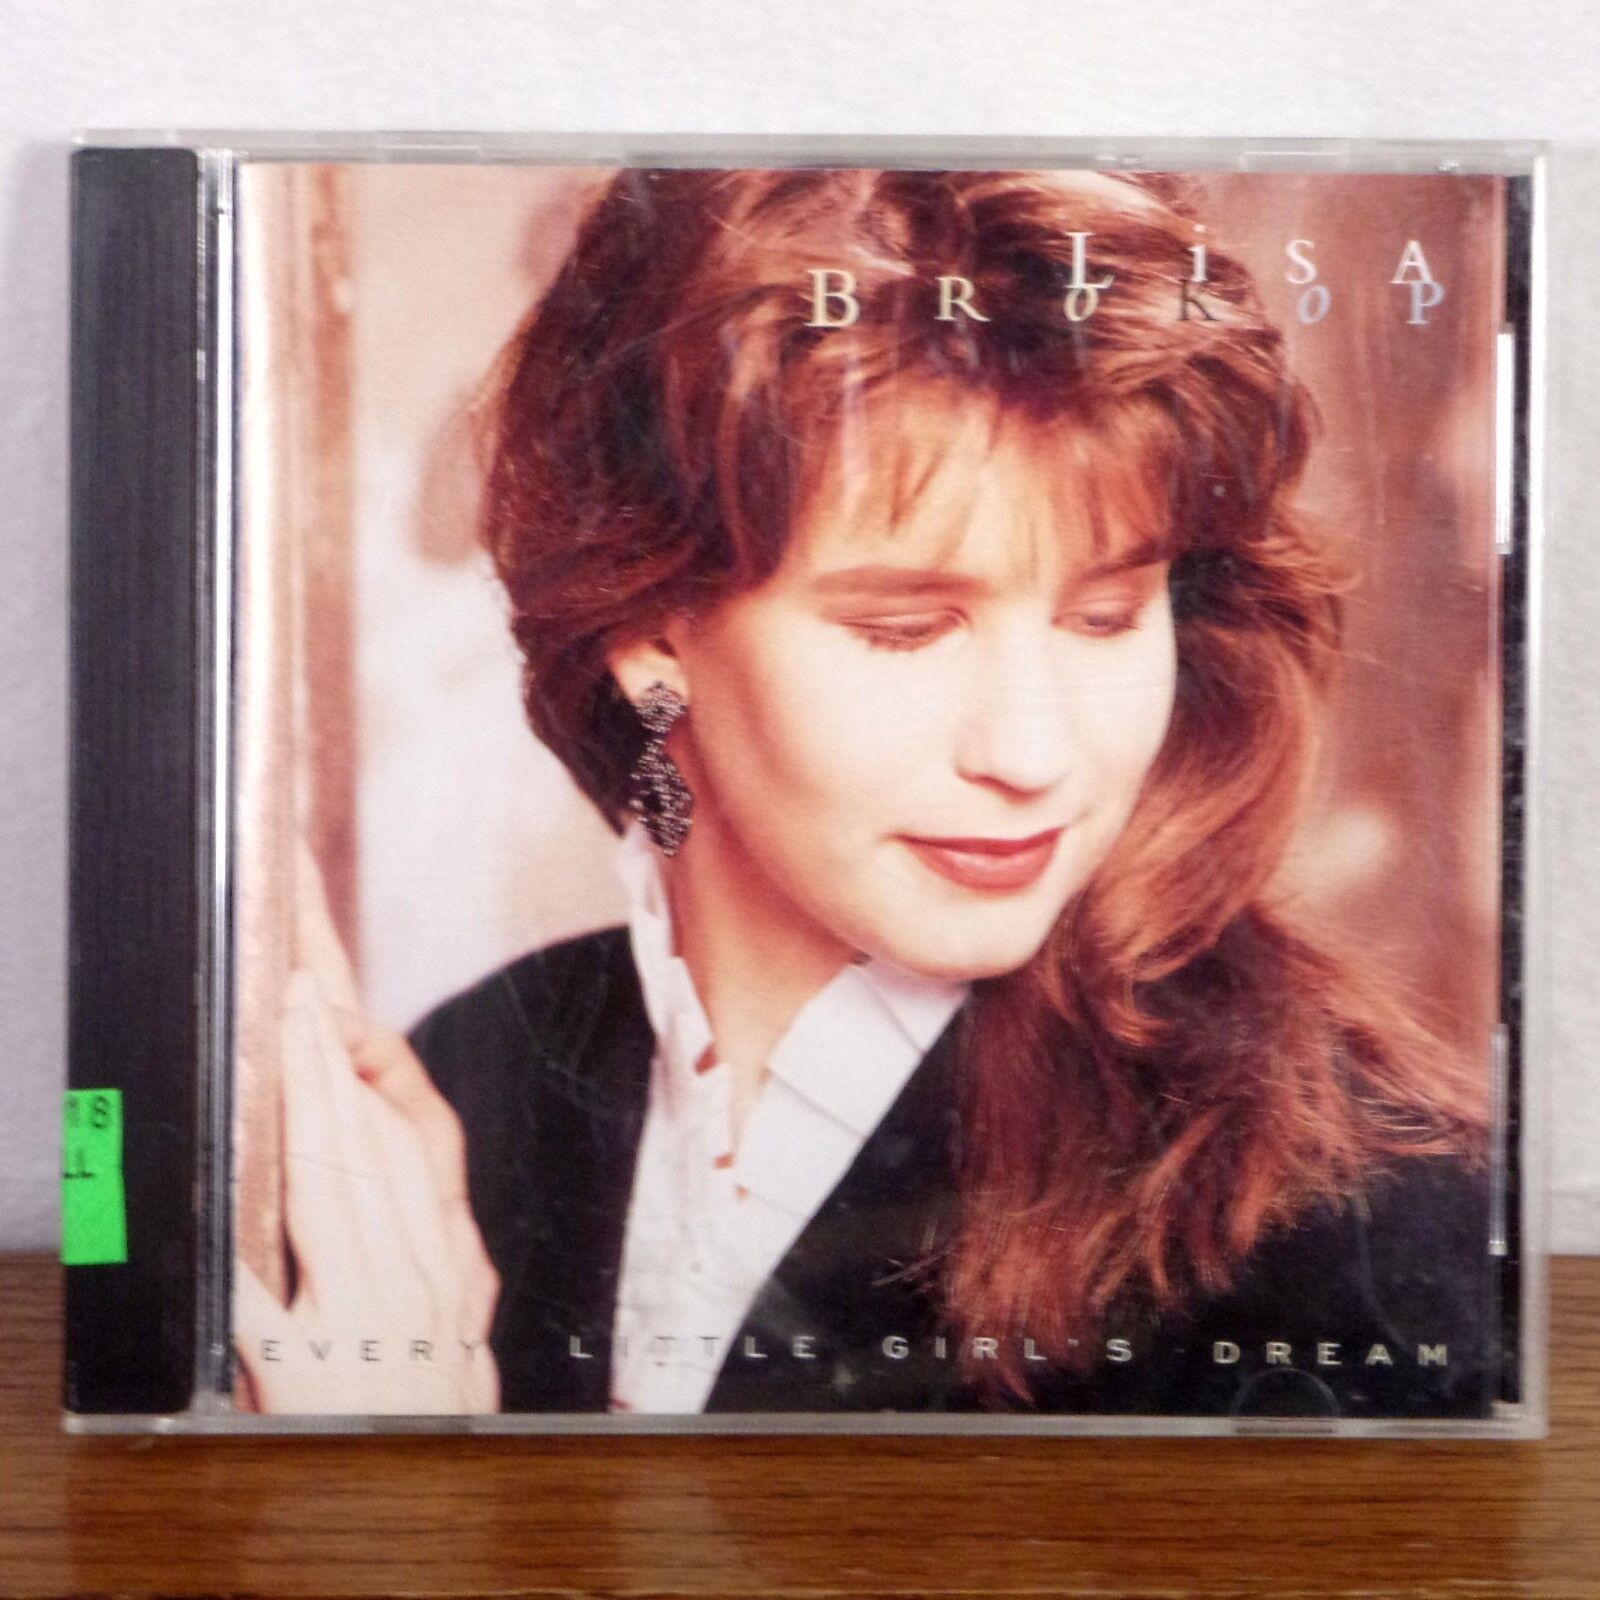 Lisa Brokop Every Little Girl\'s Dream CD Album 1994 Patriot playgraded OOP